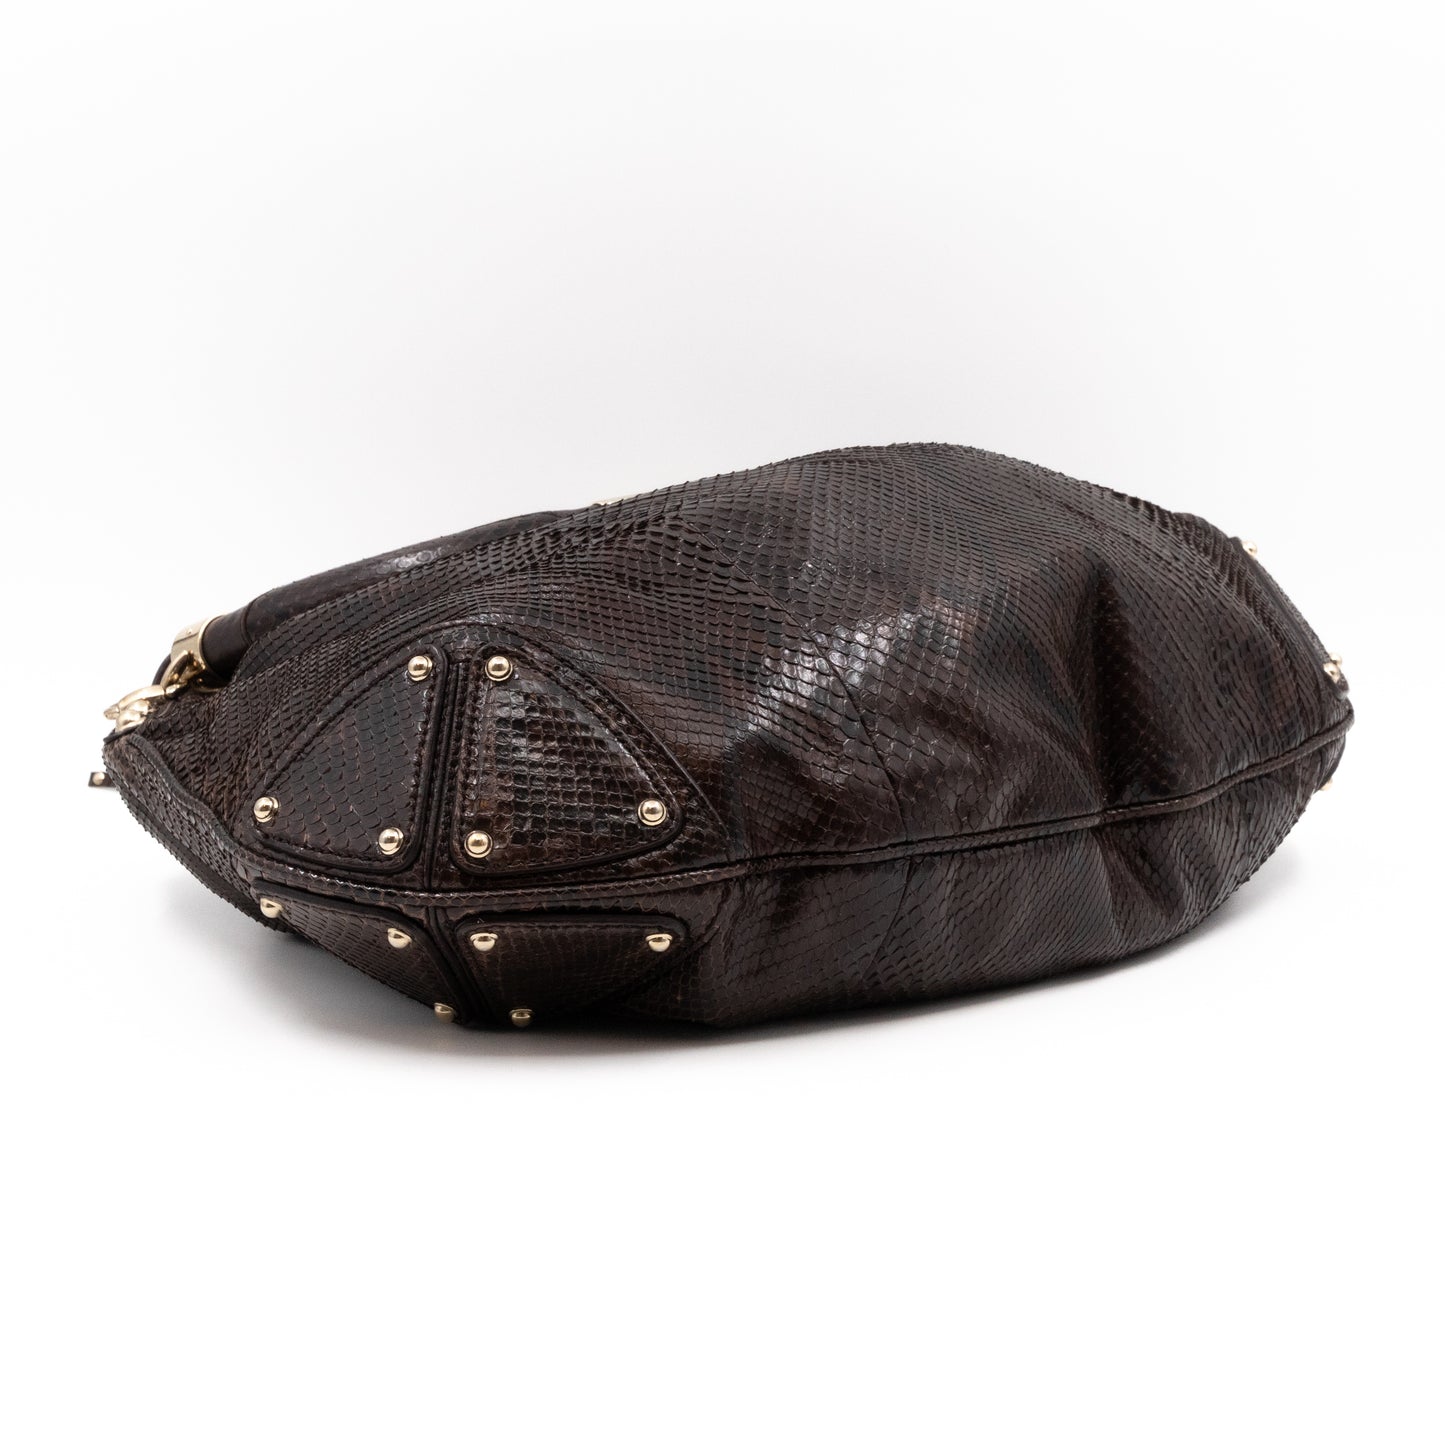 Indy Top Handle Bag Brown Python Leather